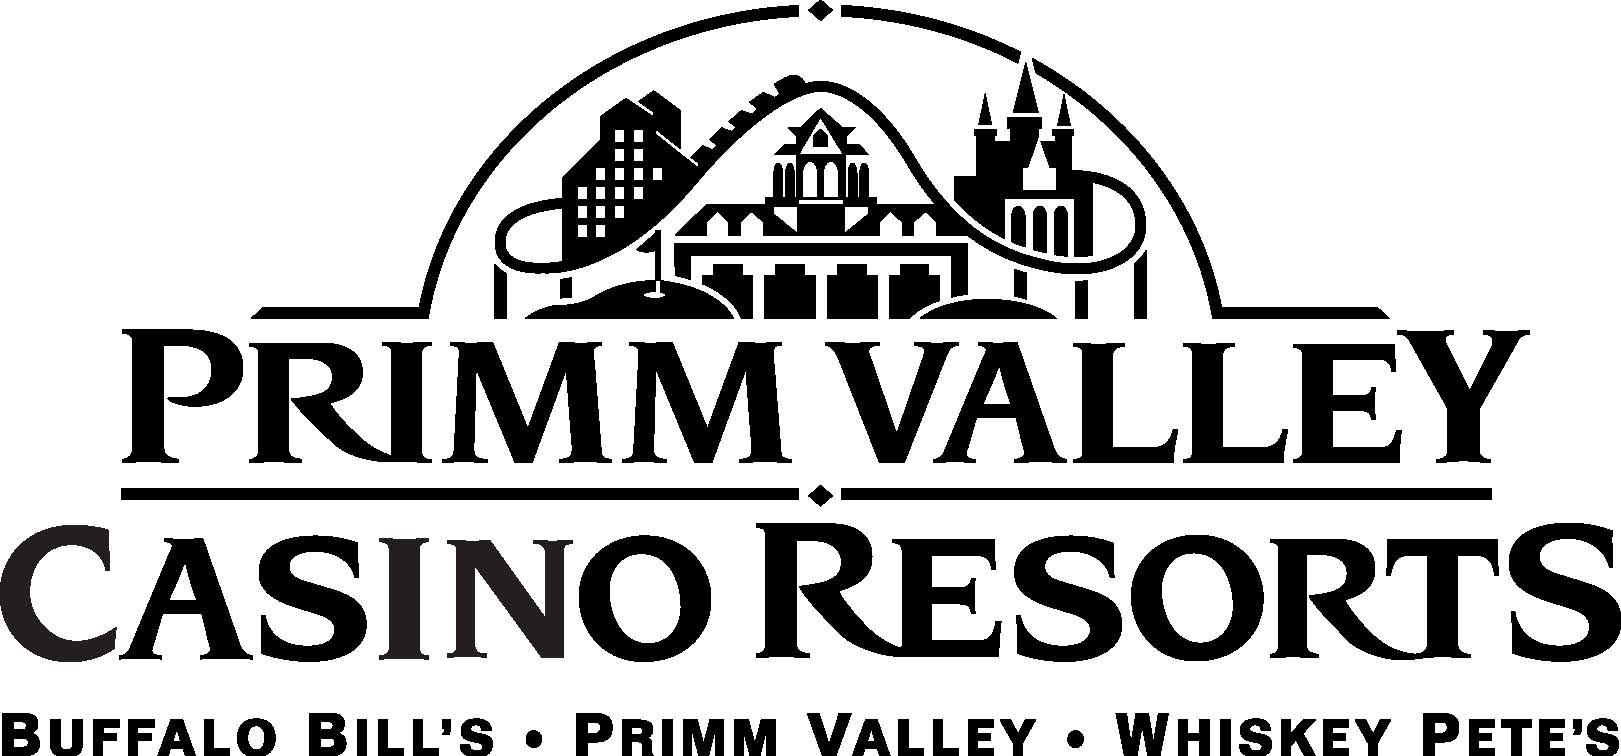 Primm Valley Casino logo.jpg